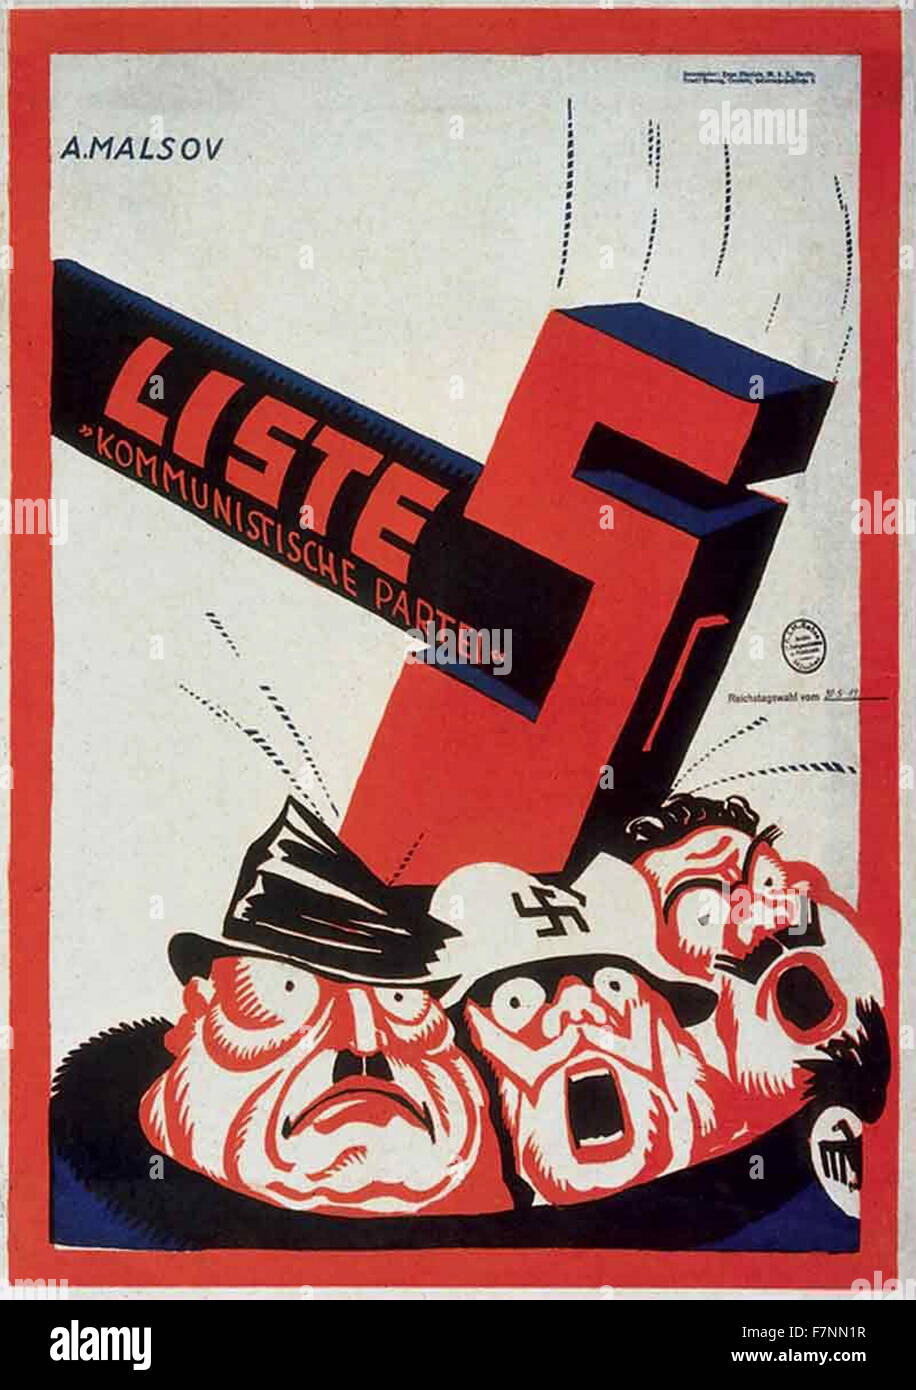 kpd-propaganda-poster-the-figures-represent-an-industrialist-a-nazi-F7NN1R.jpg